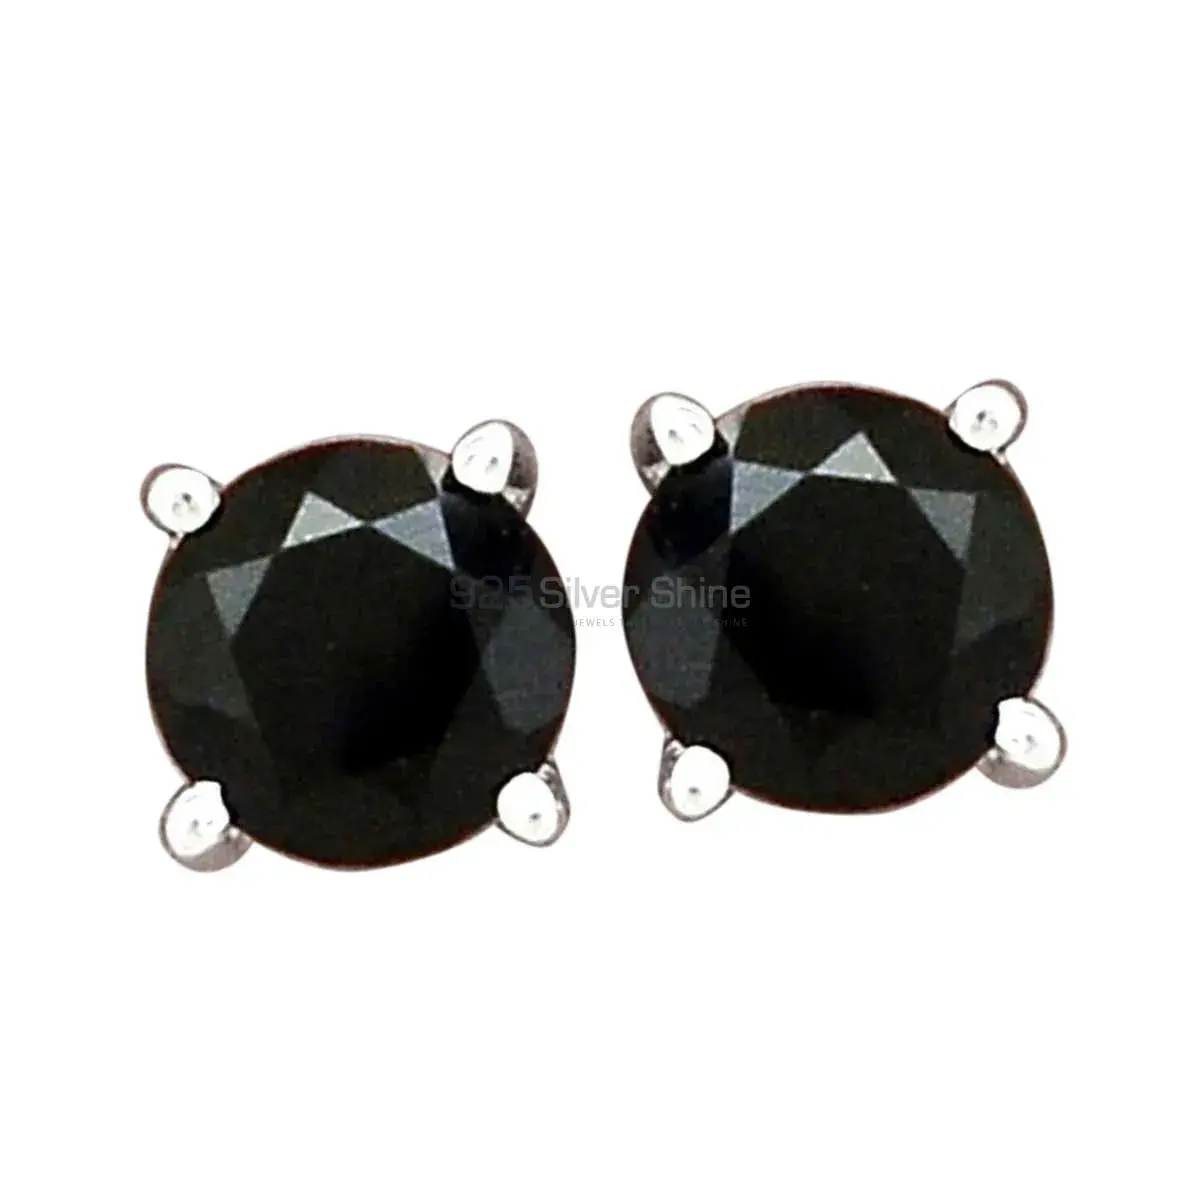 Beautiful 925 Sterling Silver Handmade Earrings Exporters In Black Onyx Gemstone Jewelry 925SE2713